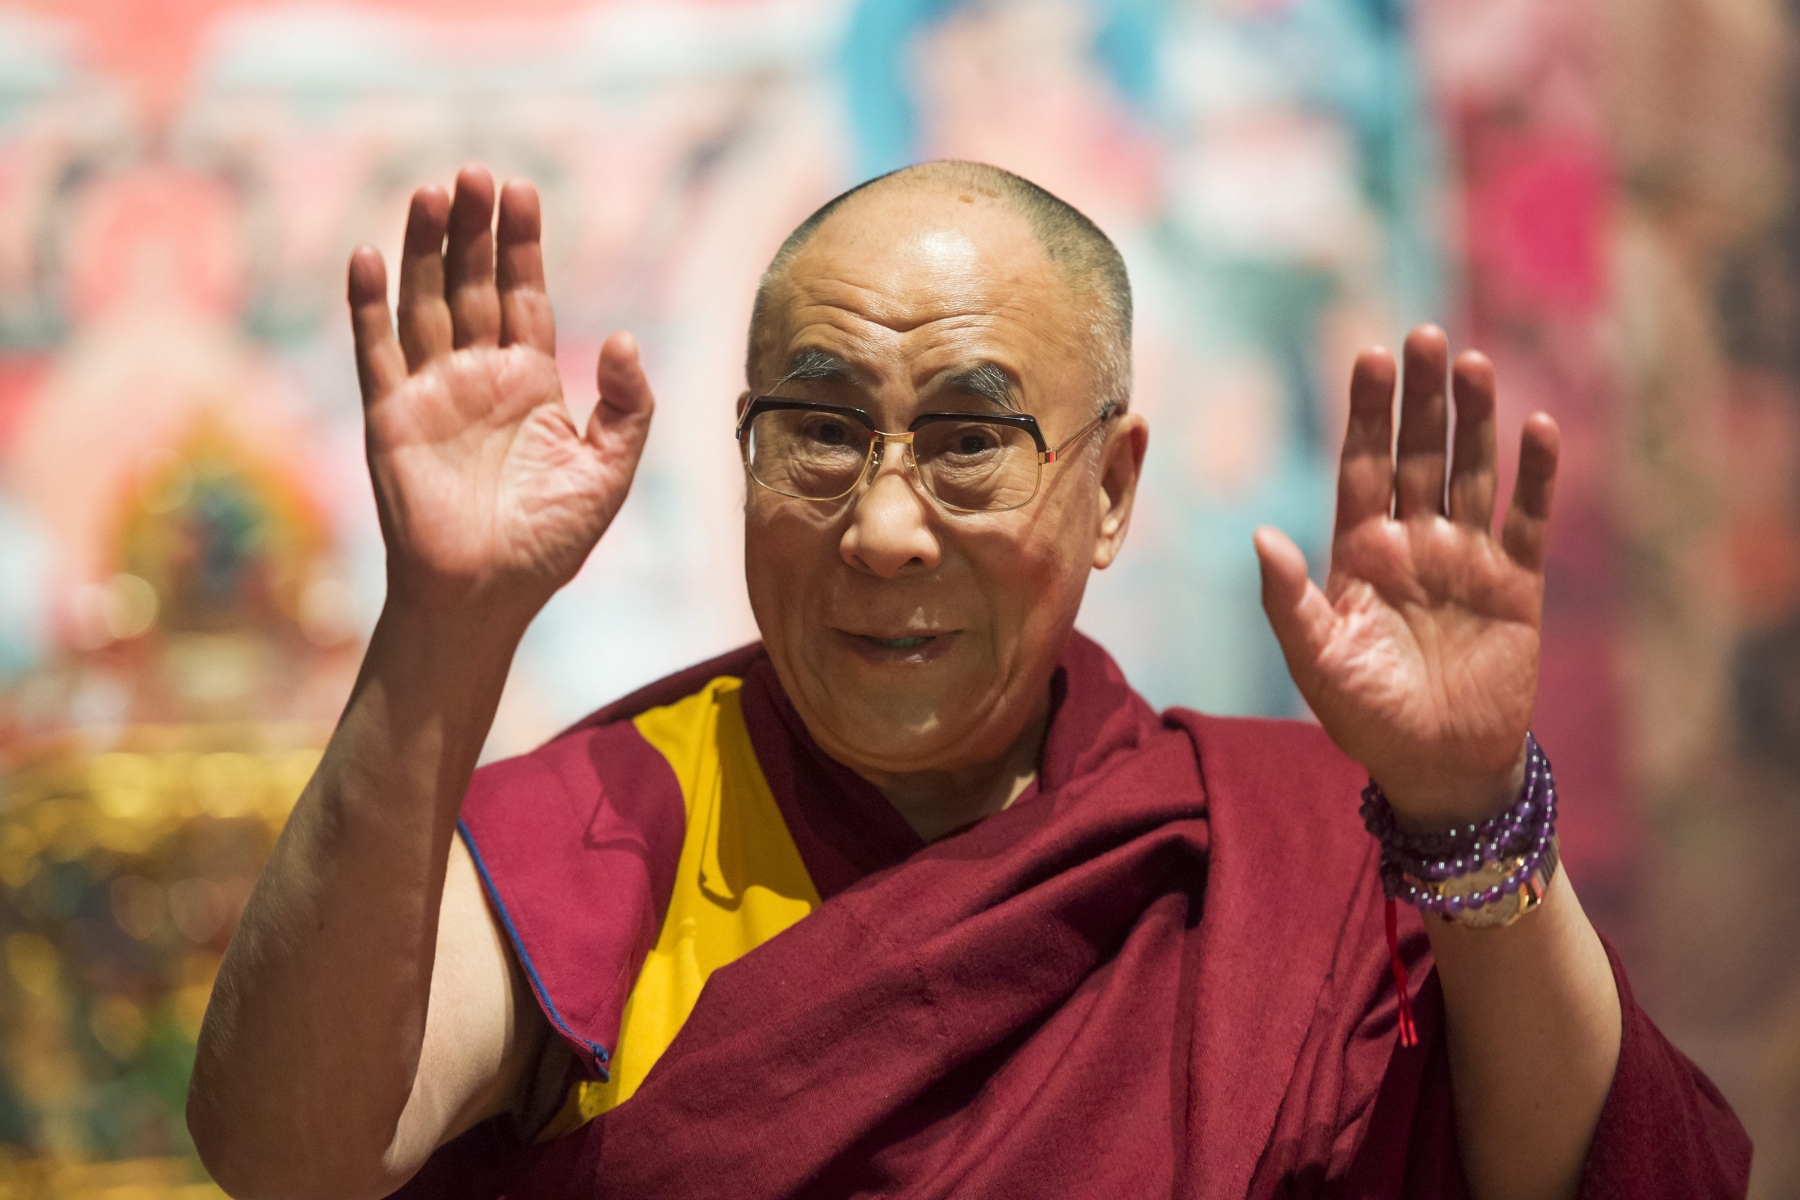 Tibetan spiritual leader Dalai Lama gestures during a spiritual event at the Forum Arena in Fribourg, western Switzerland, Sunday, April 14, 2013. The Dalai Lama pays a four day visit to Switzerland. (KEYSTONE/Jean-Christophe Bott)